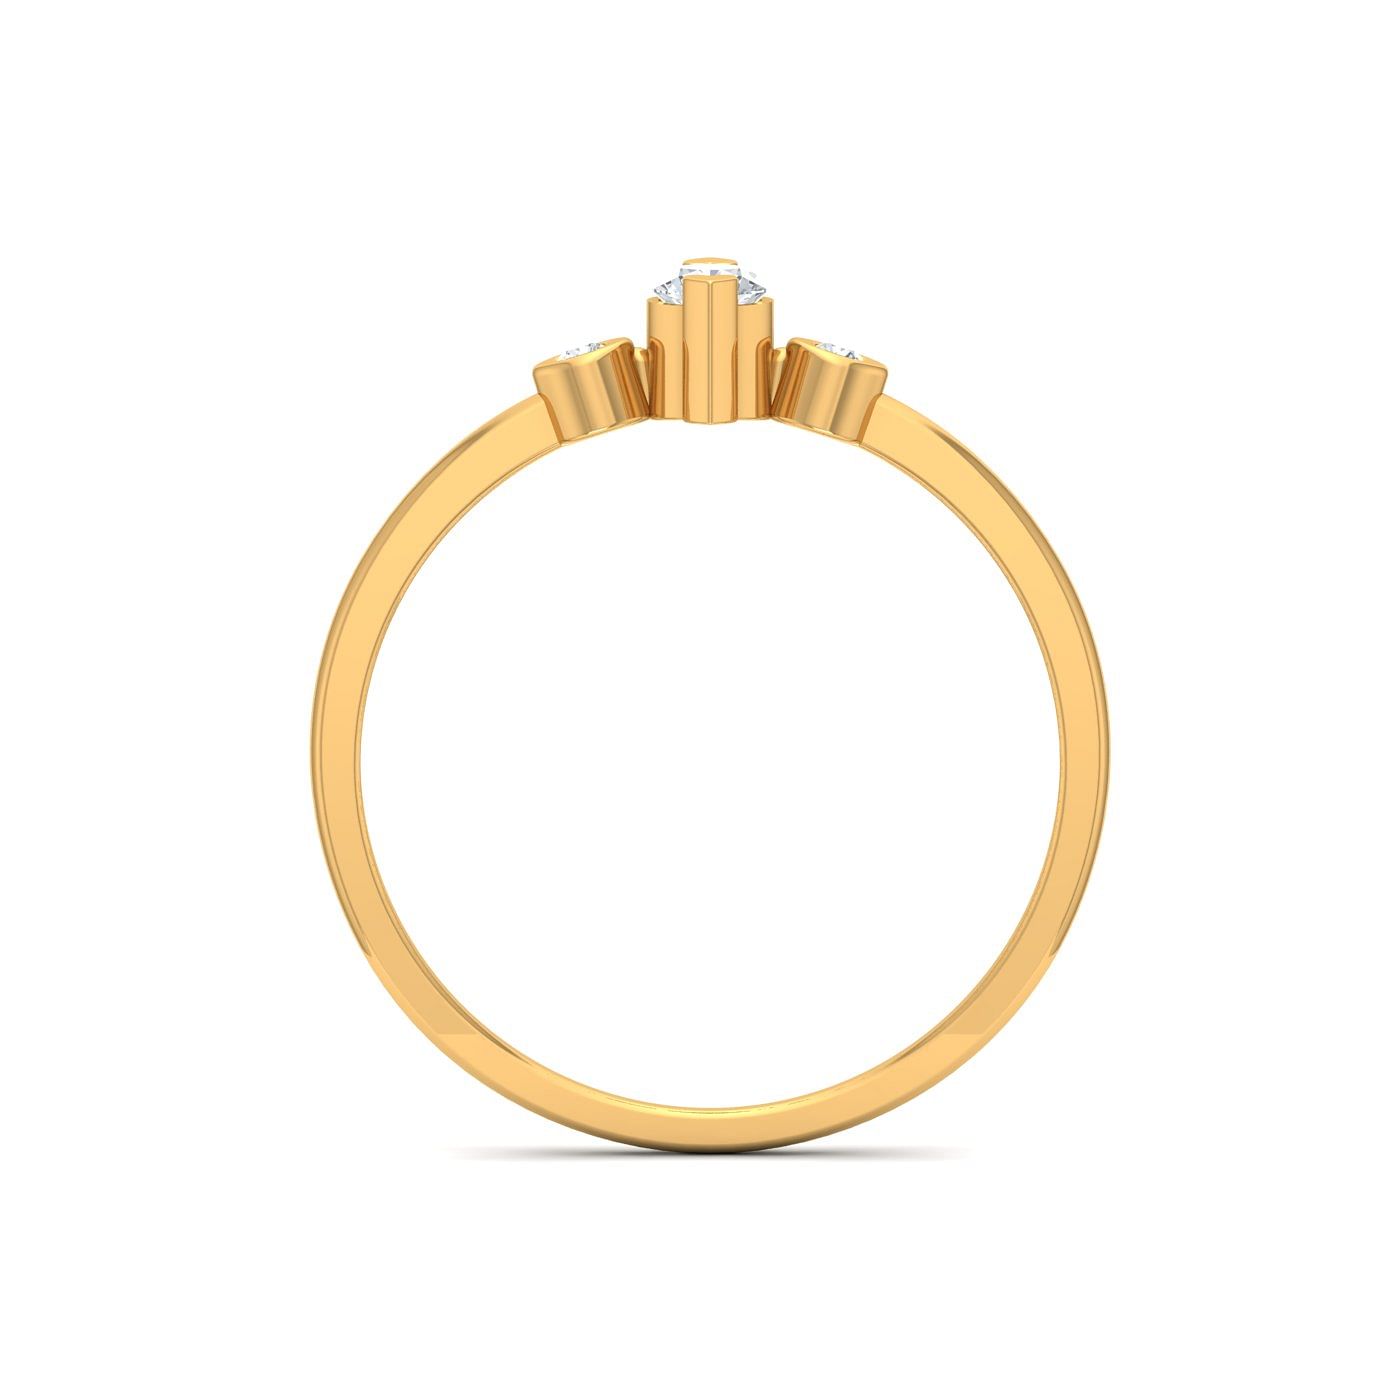 light weight yellow gold diamond ring for women